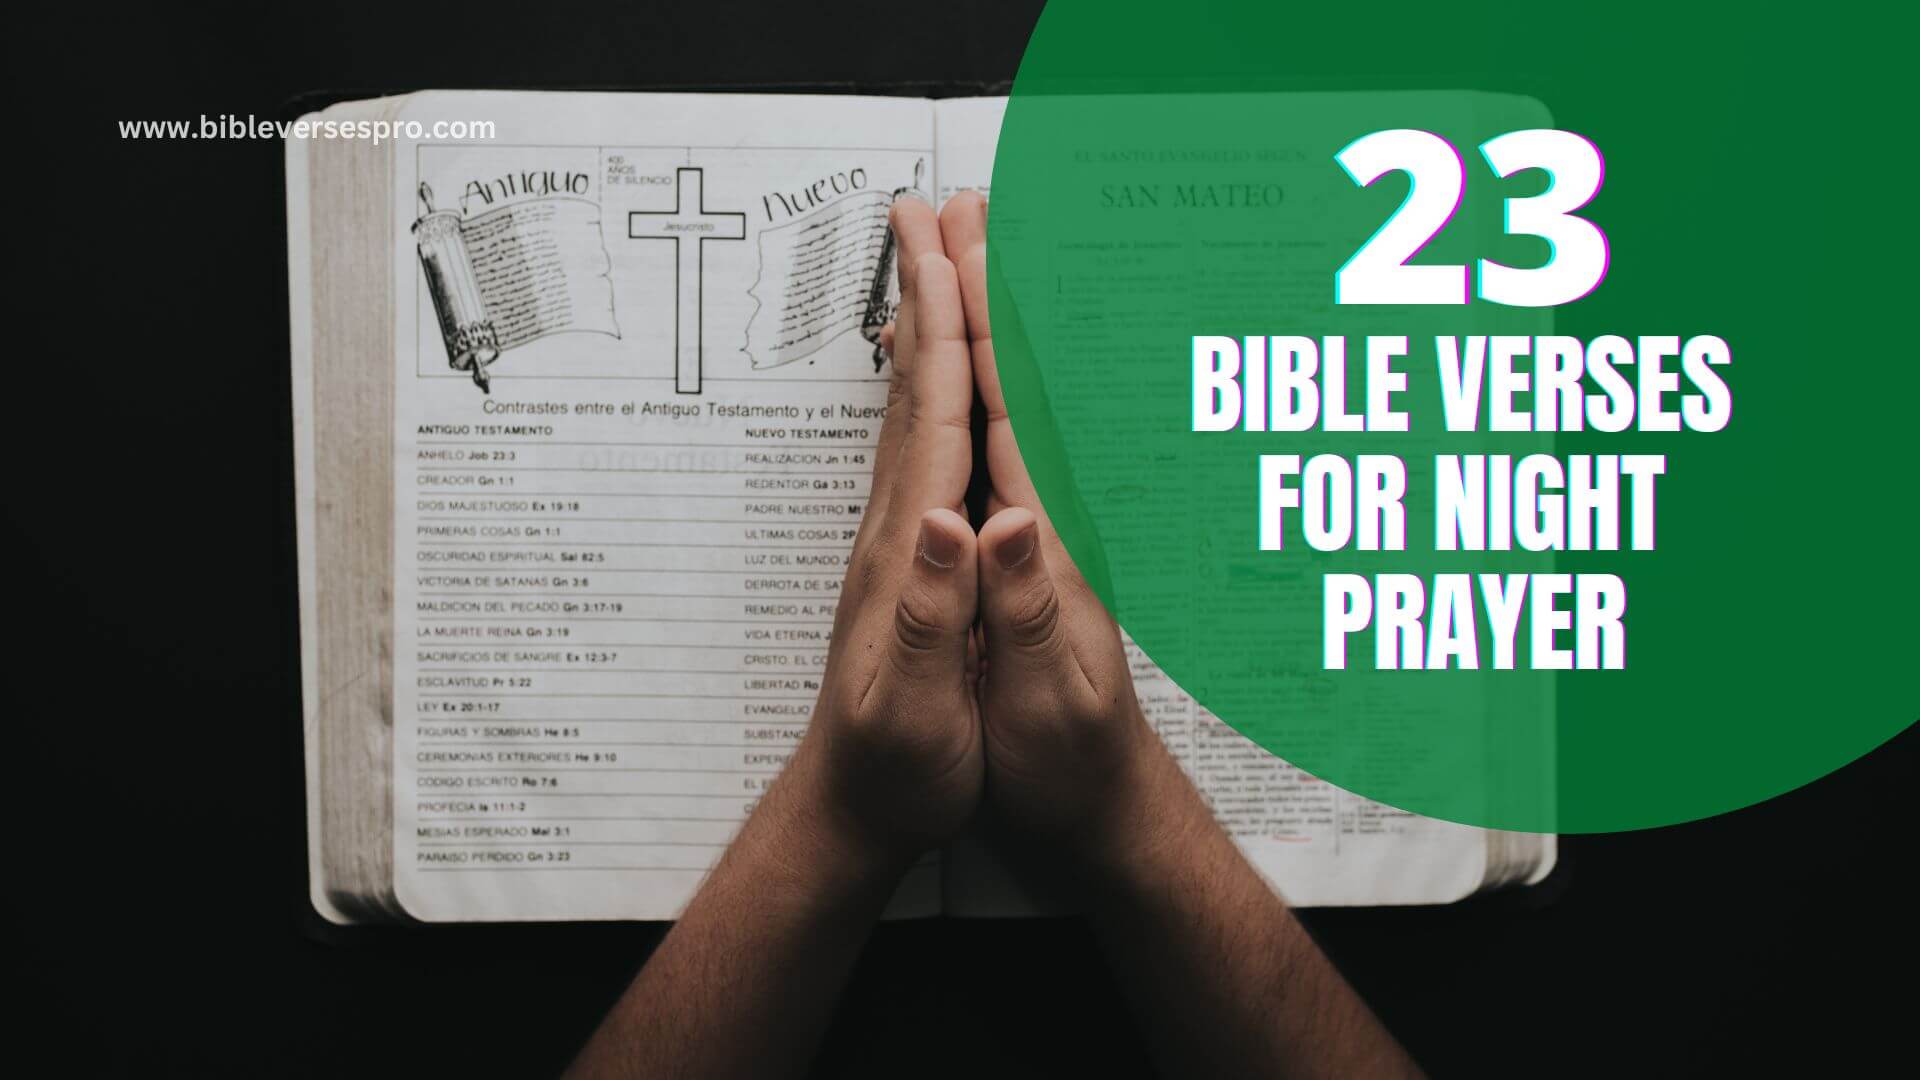 BIBLE VERSES FOR NIGHT PRAYER